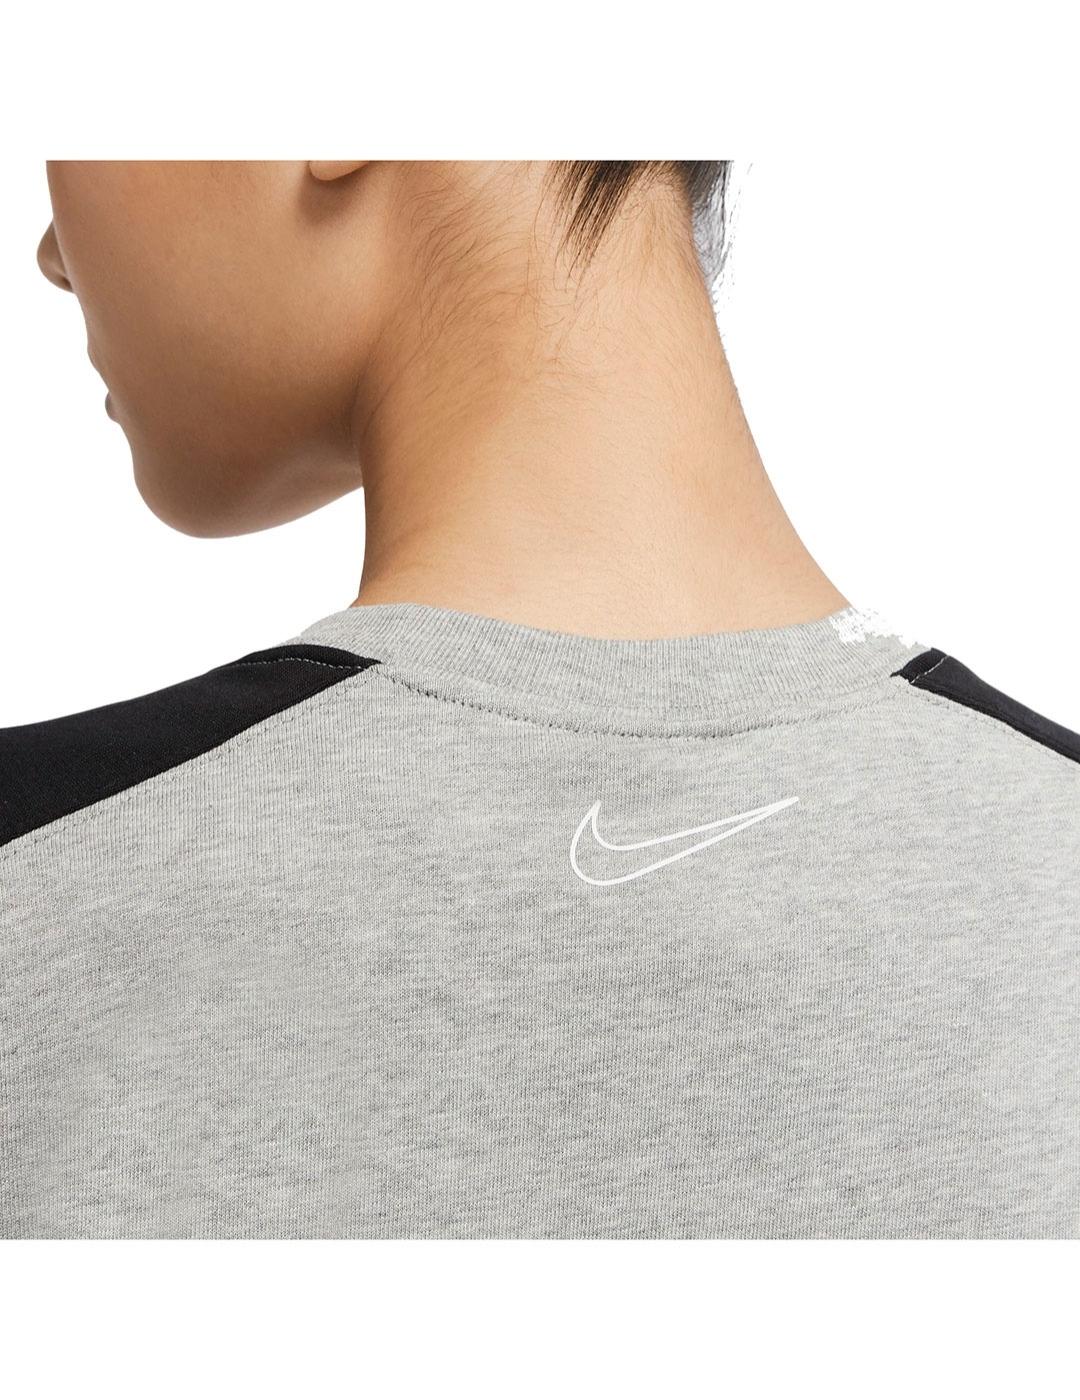 Camiseta Mujer Nike Archive Gris